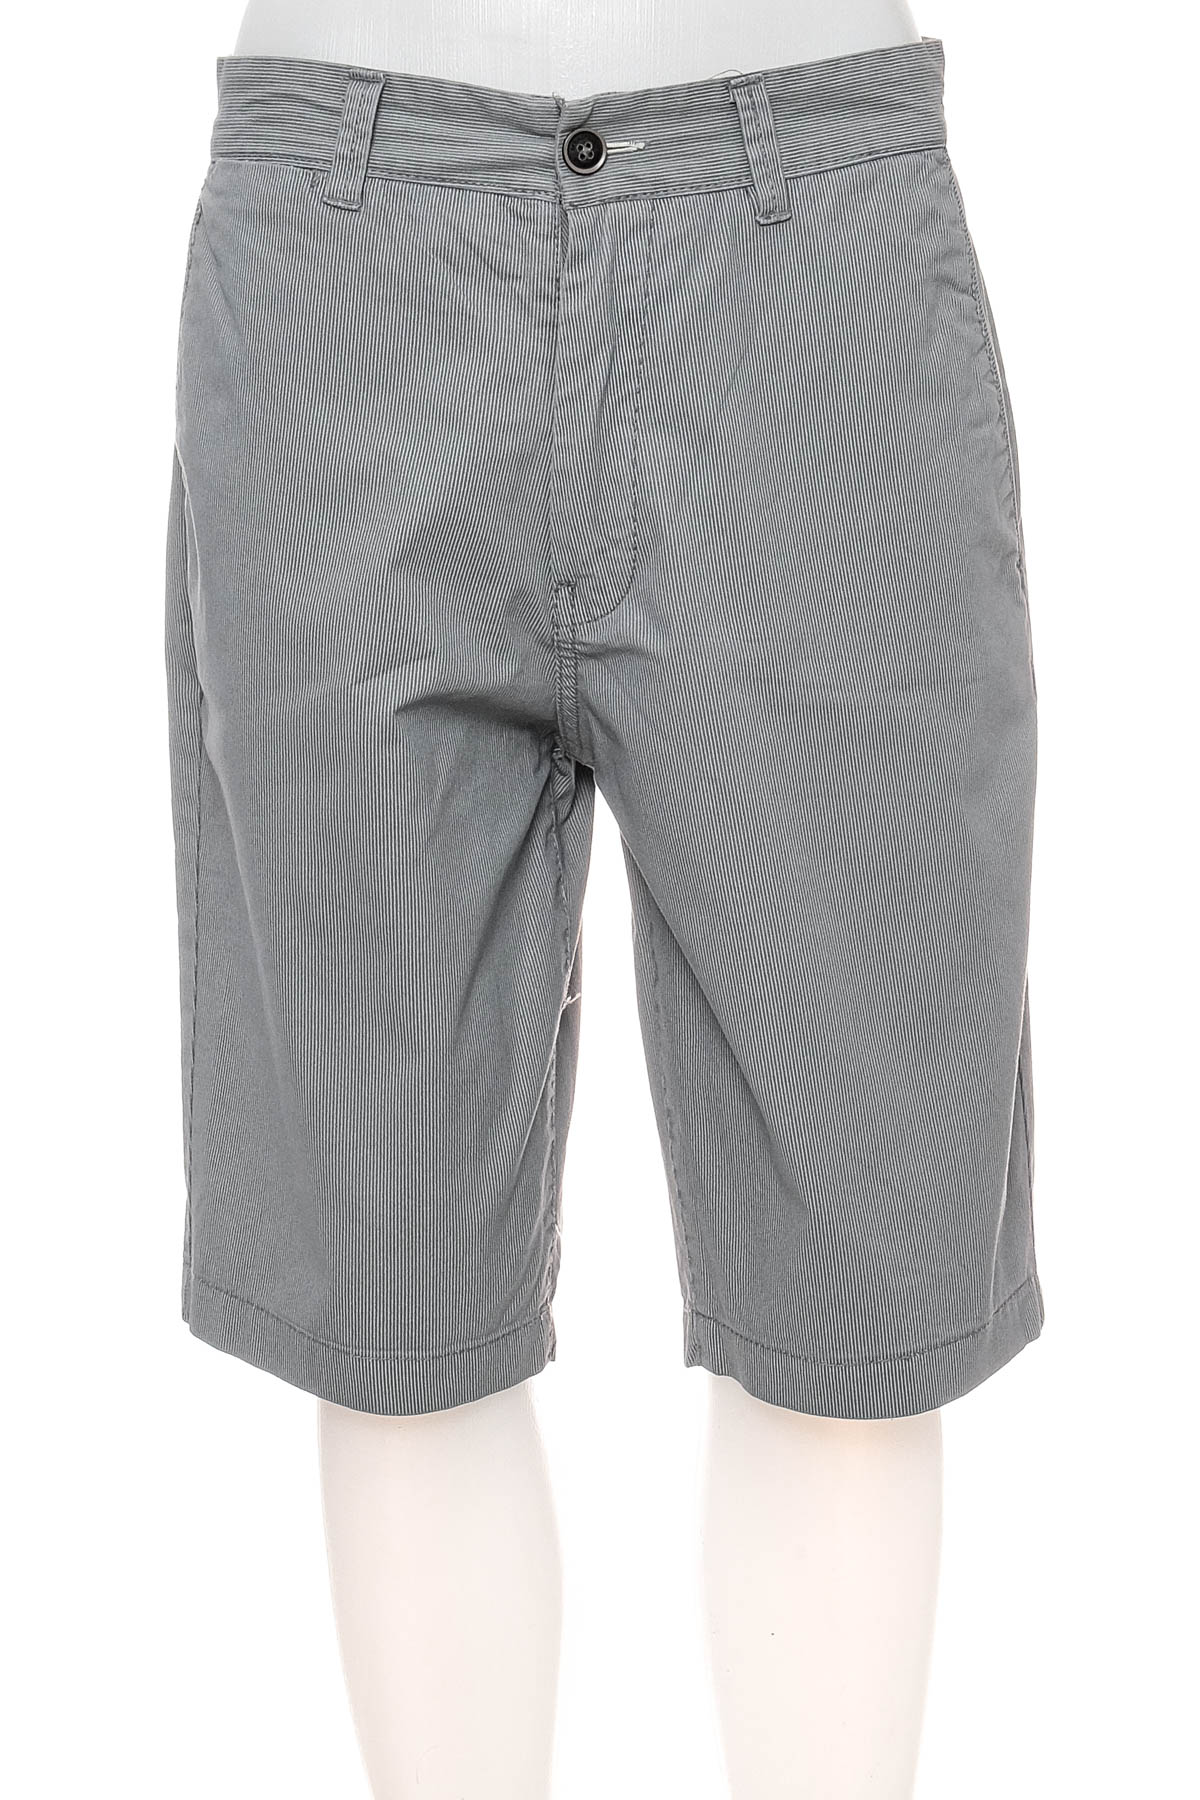 Men's shorts - Springfield - 0